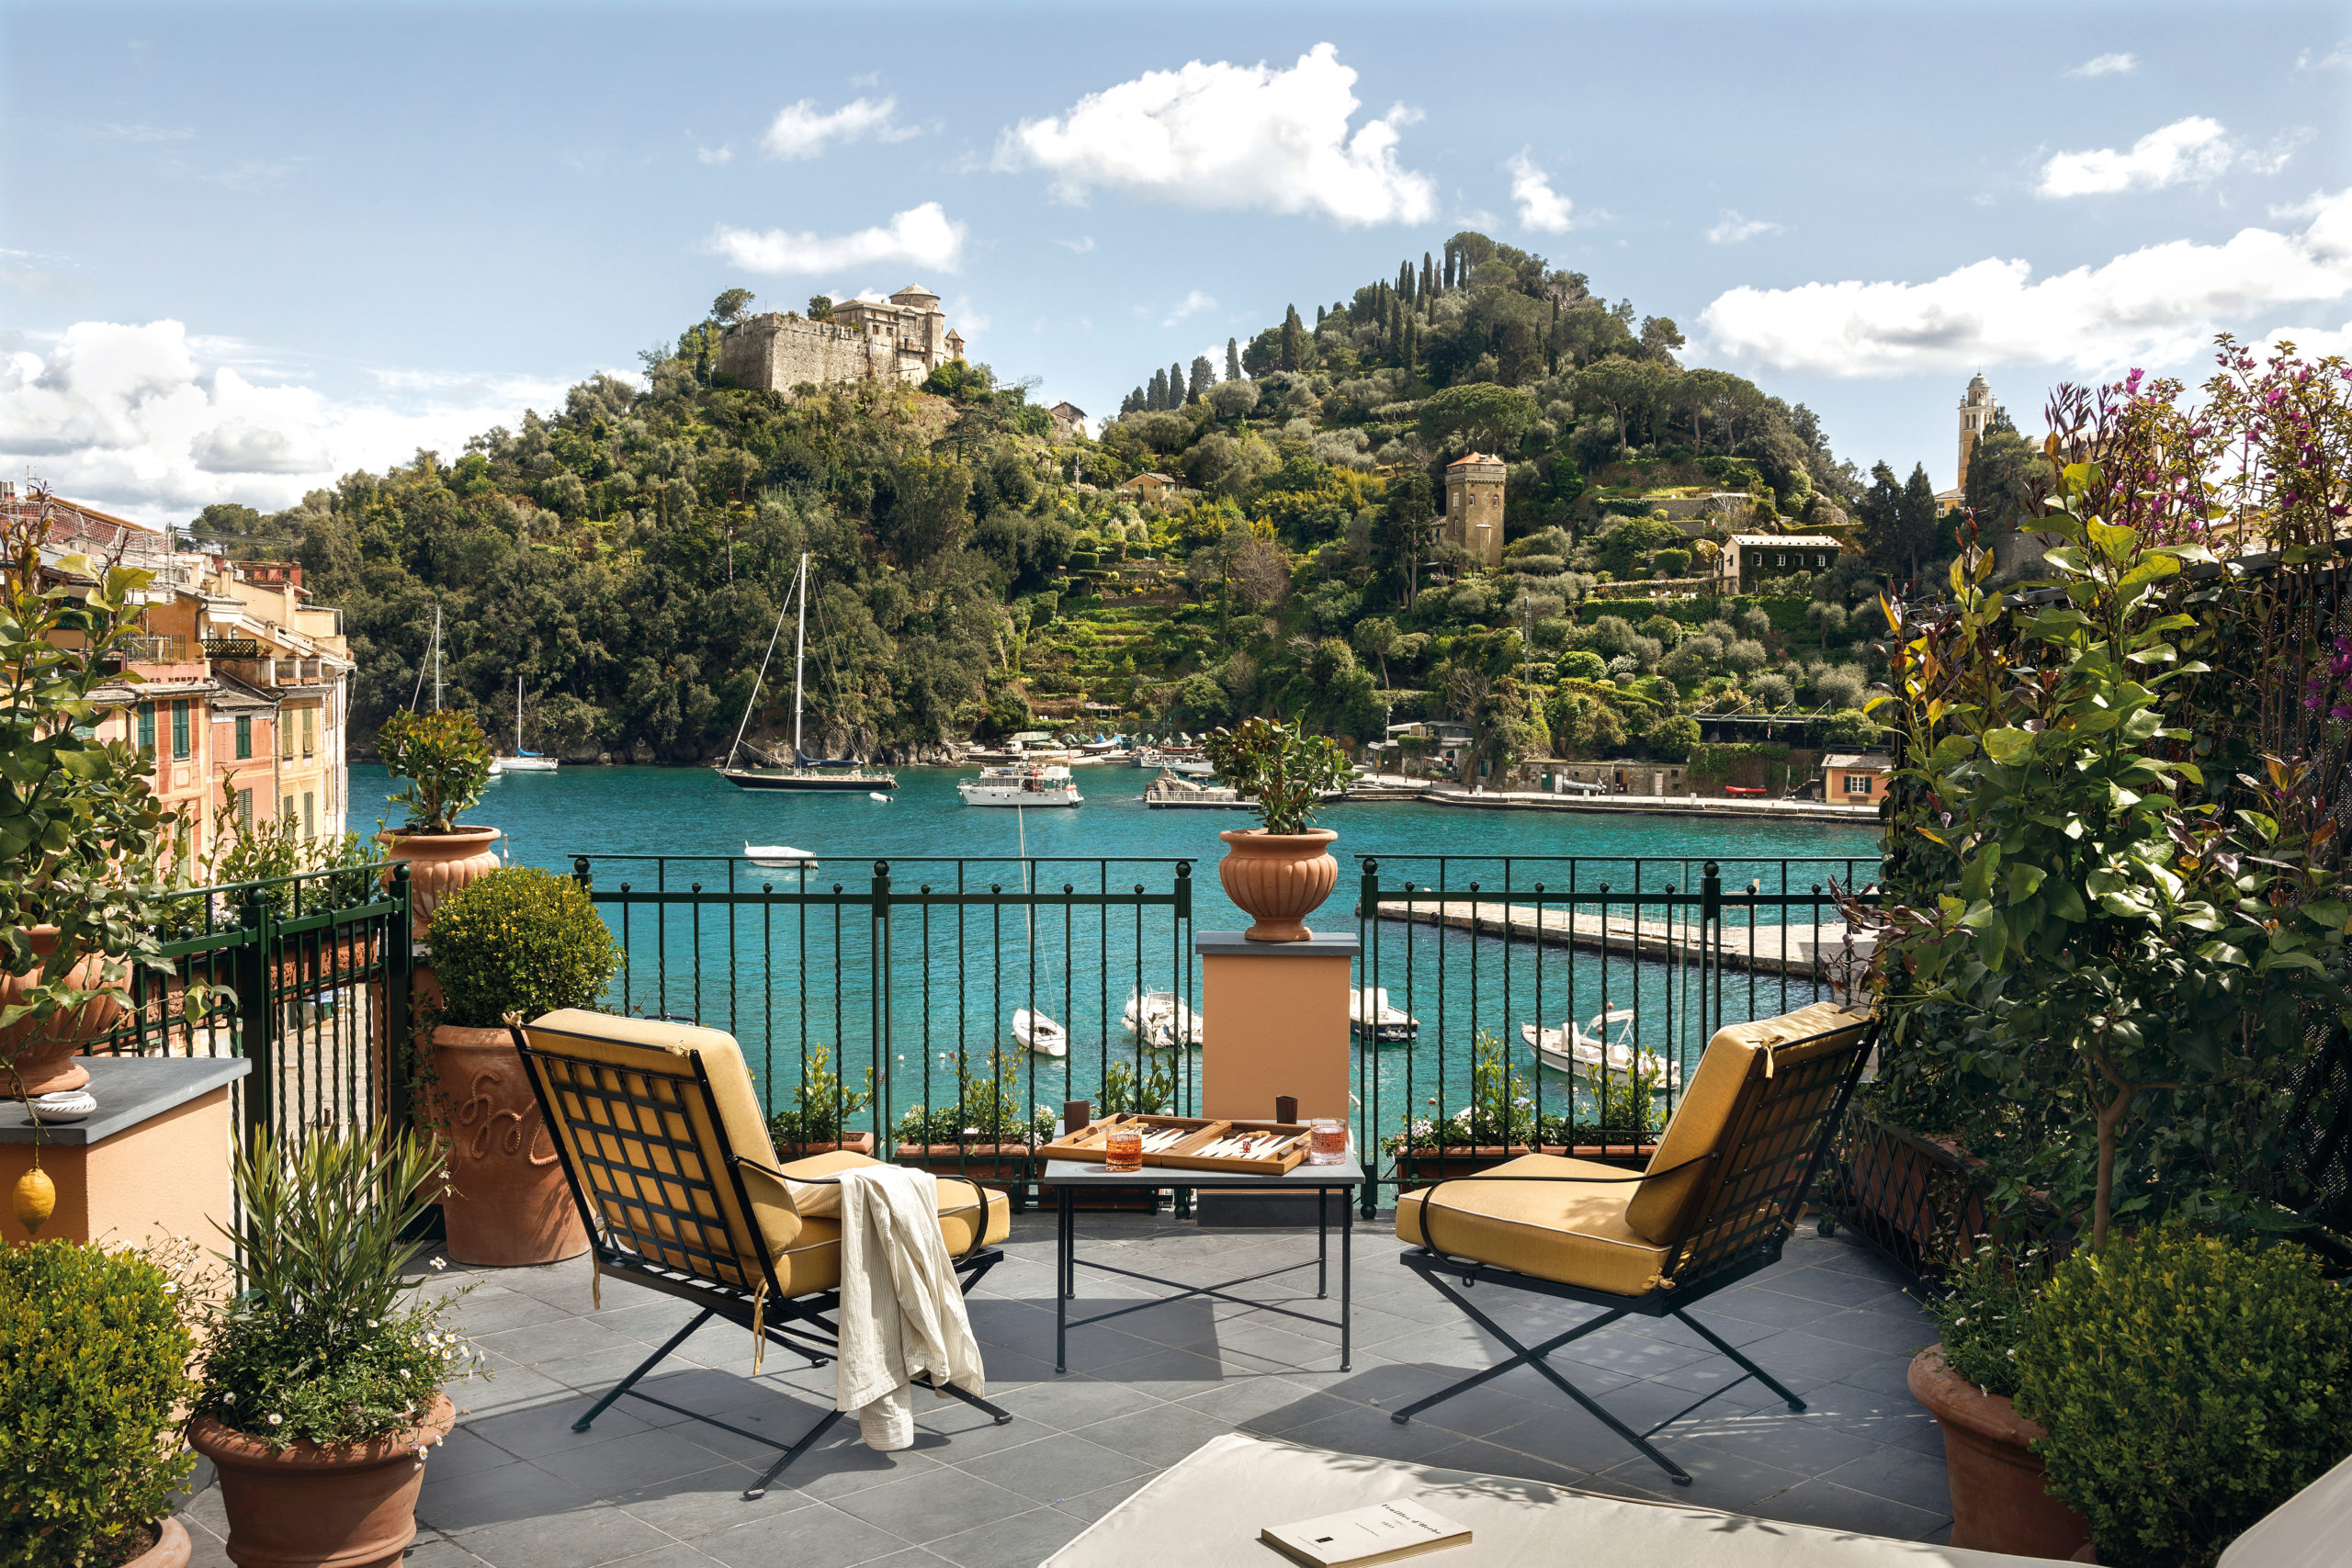 Hotel Splendido A Belmond Hotel Portofino, Ligurian Riviera